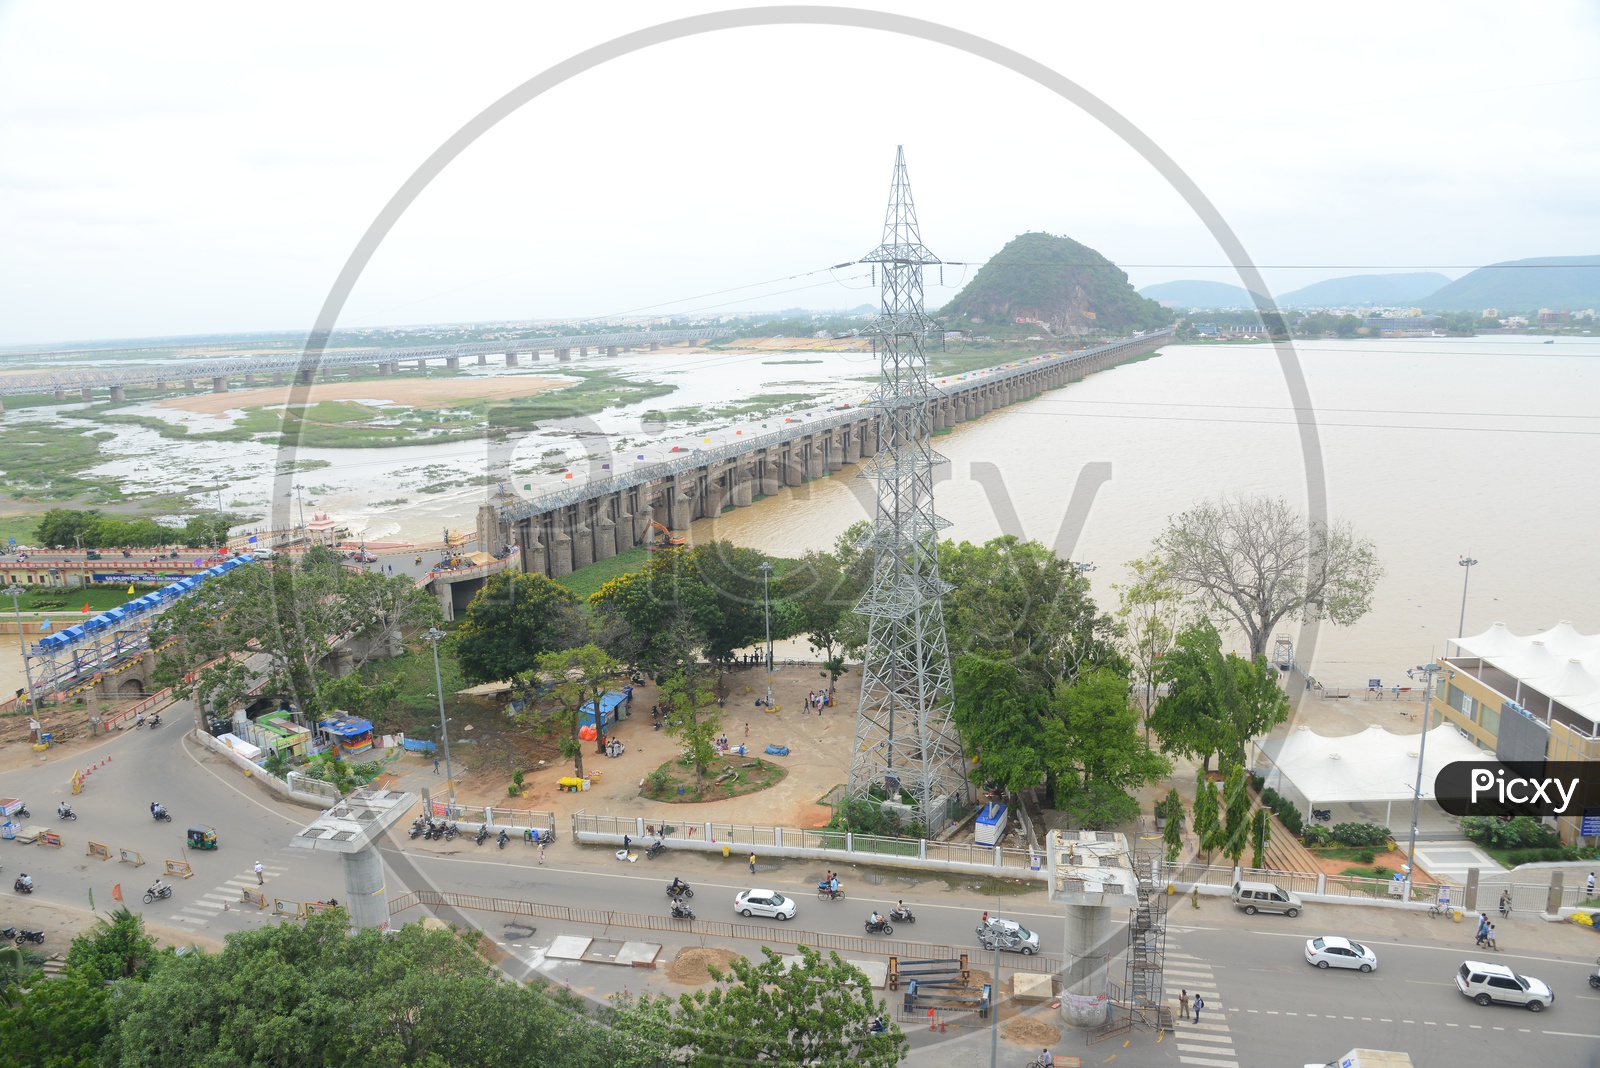 Ariel view of the praksam barrage over Krishna river and traffic in Vijayawada